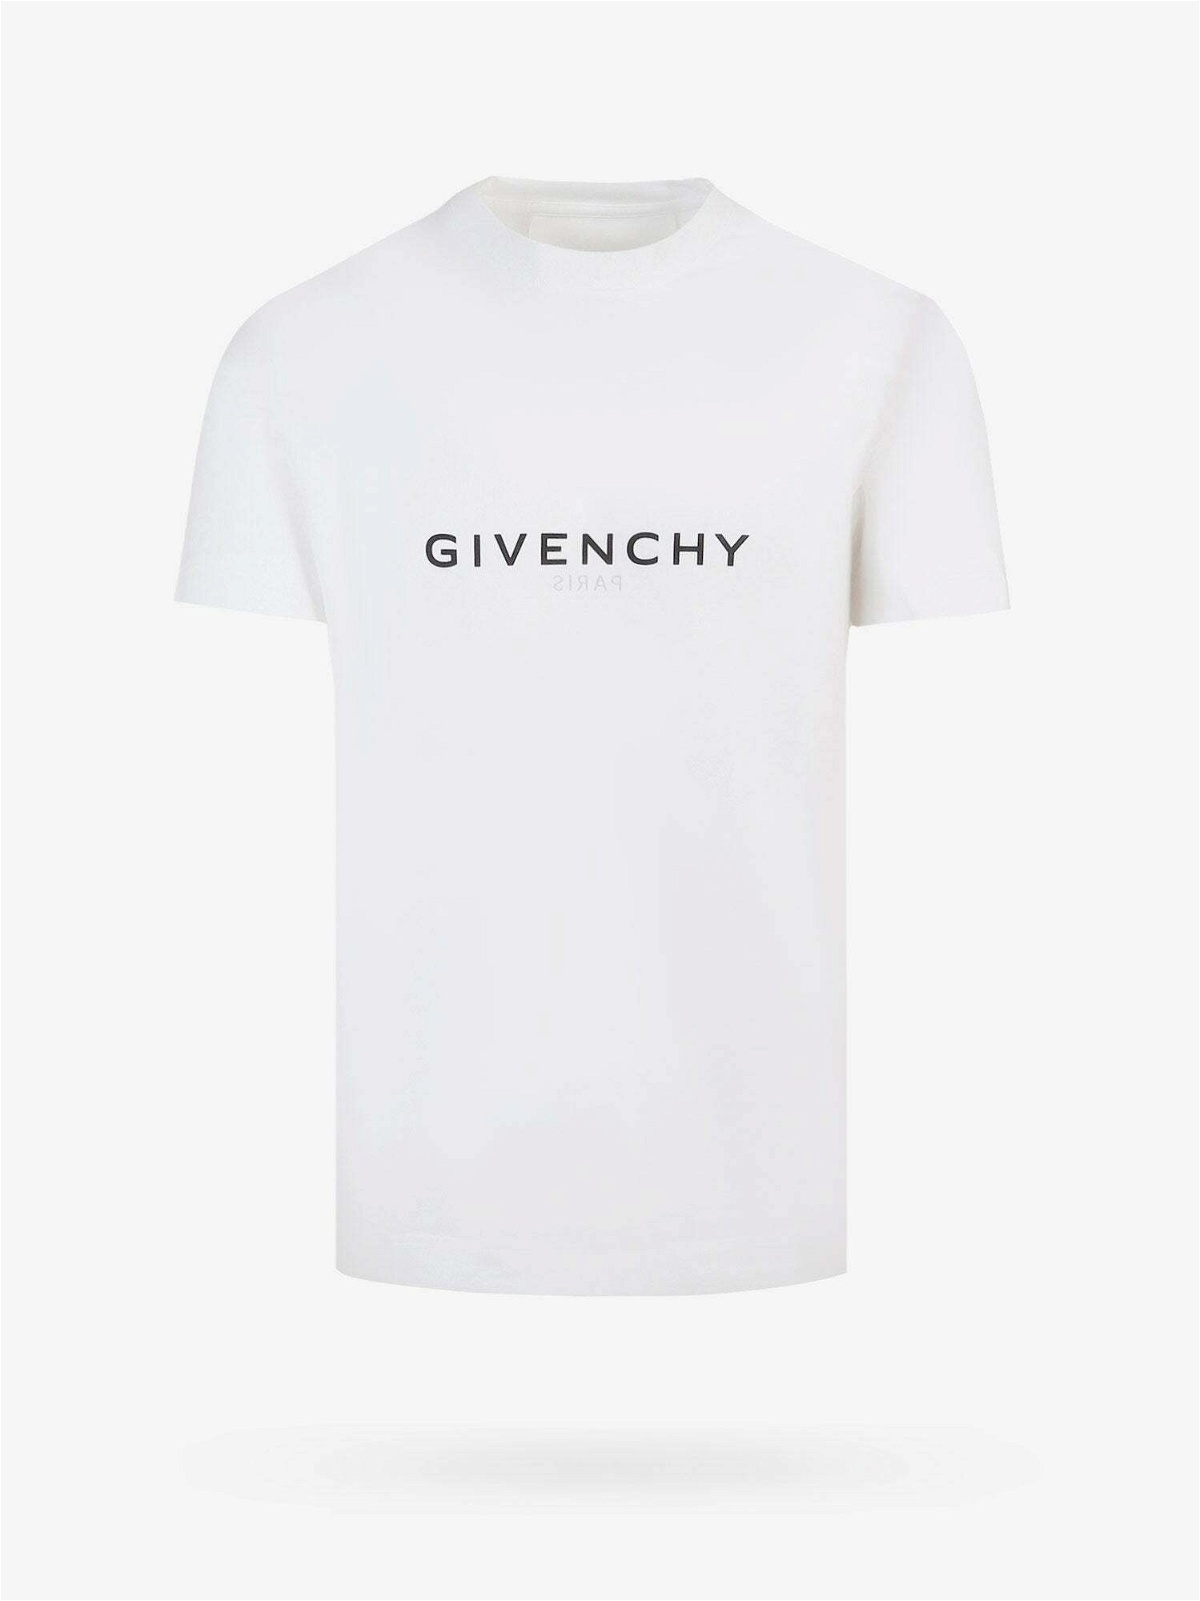 Givenchy T Shirt White Mens Givenchy